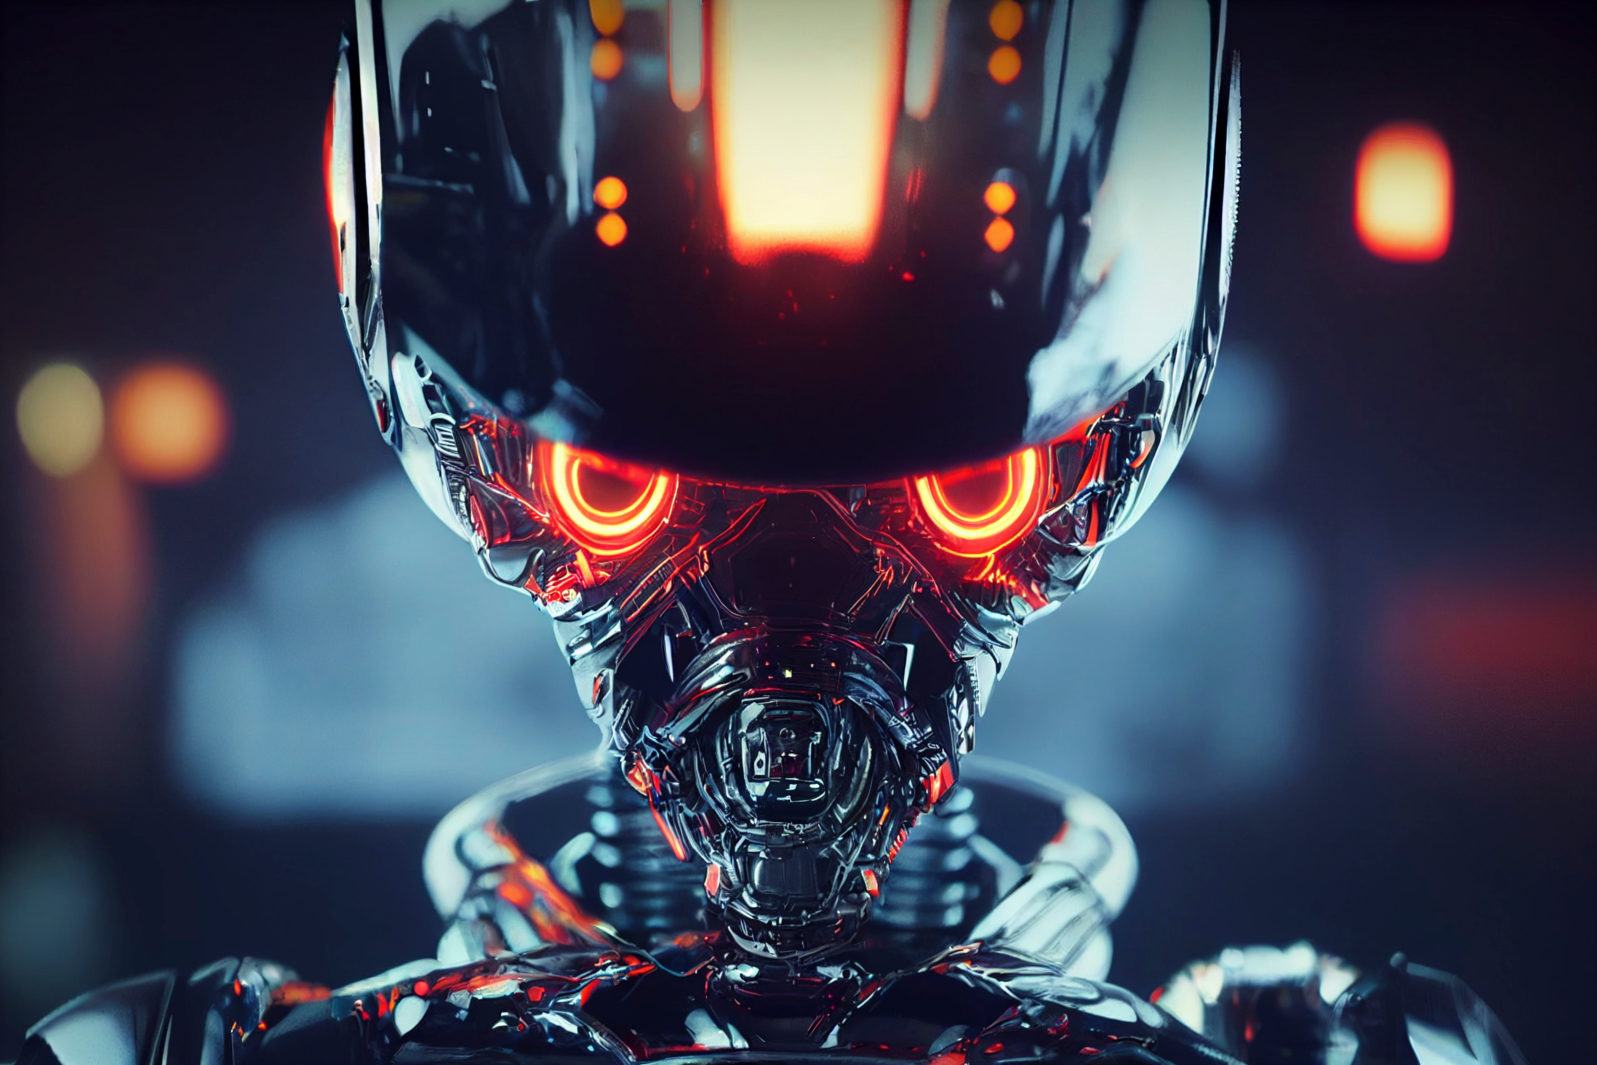 Evil robot, glowing lights, shiny metalic parts